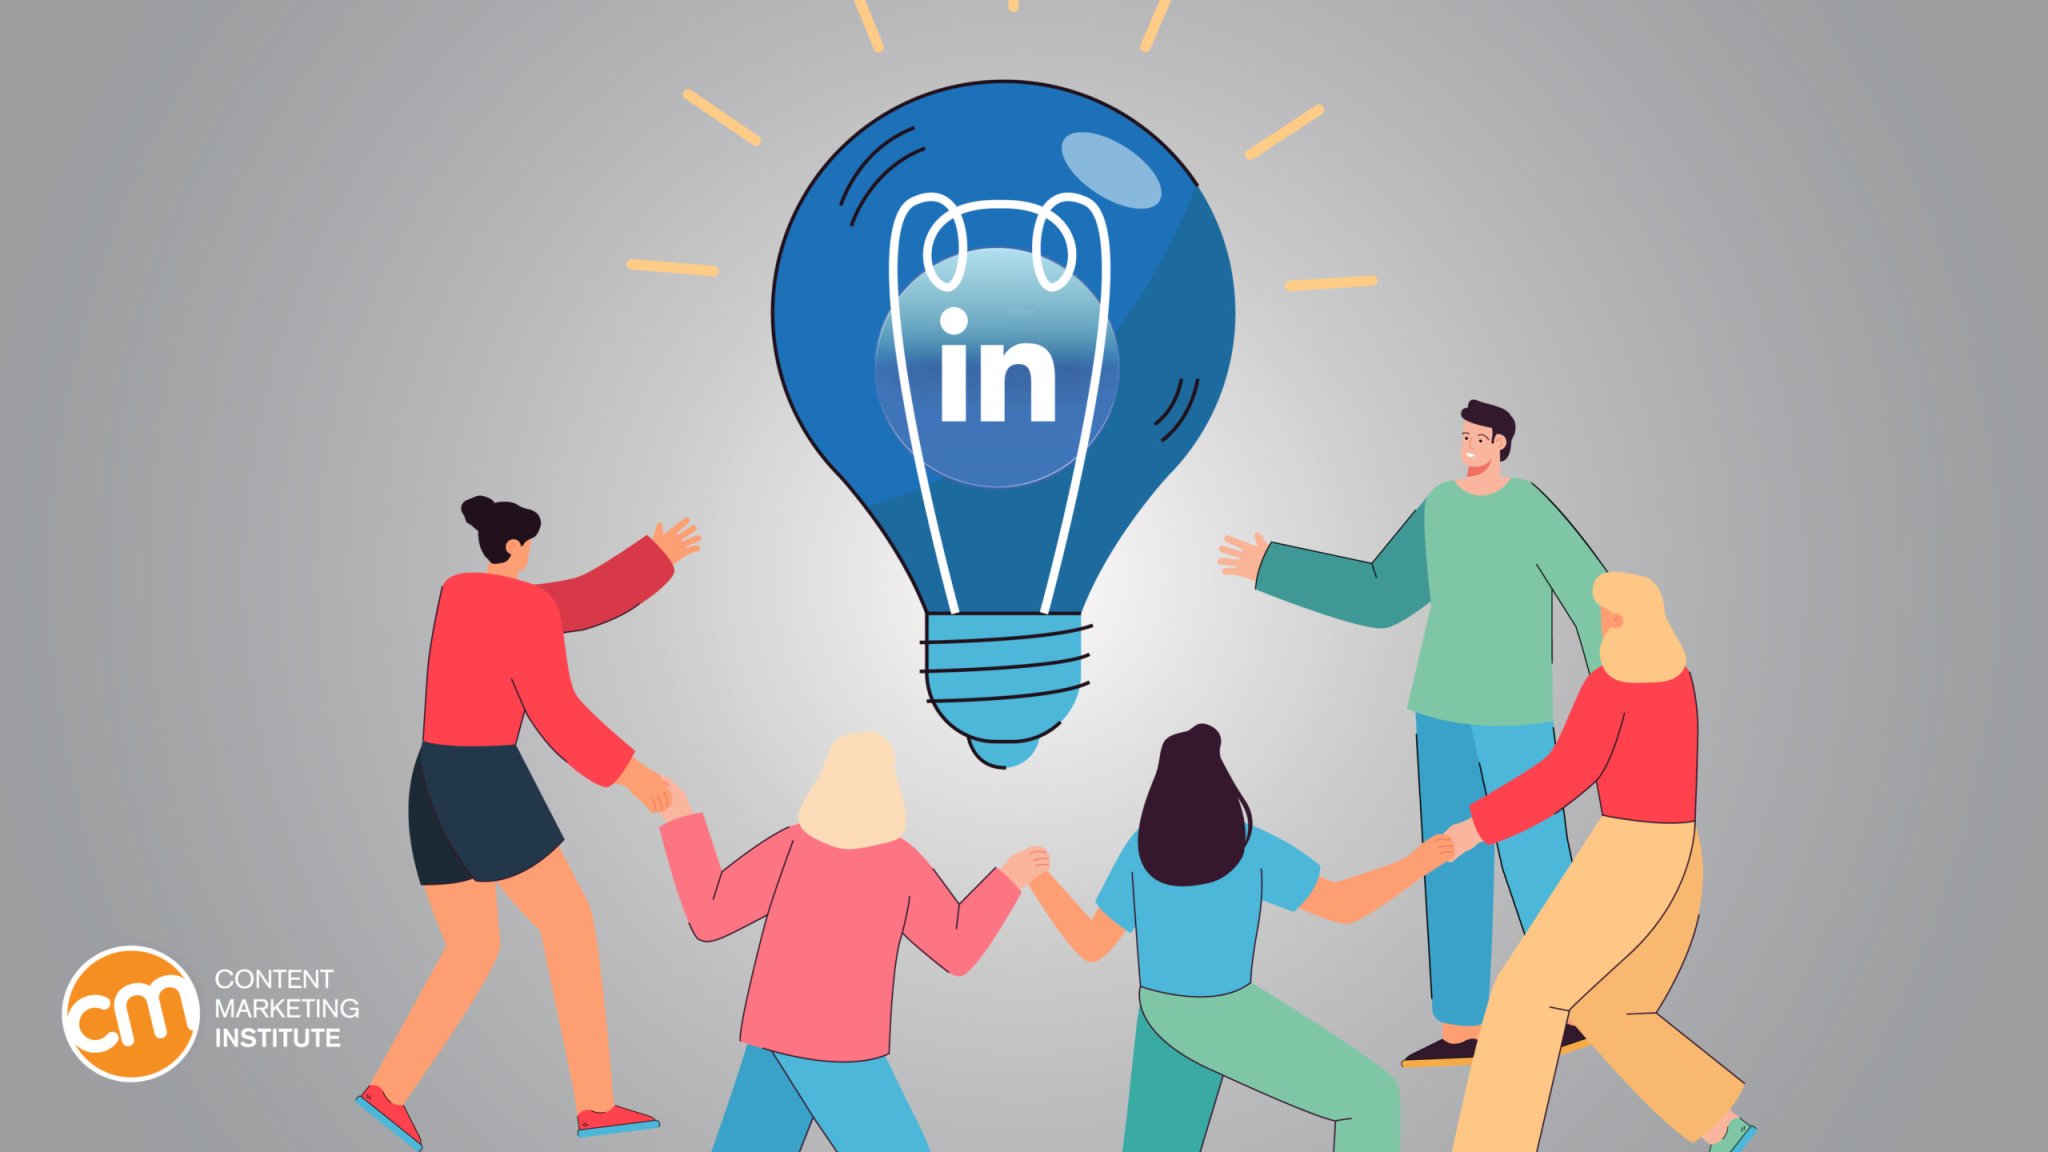 LinkedIn Goes All-In on B2B Marketing